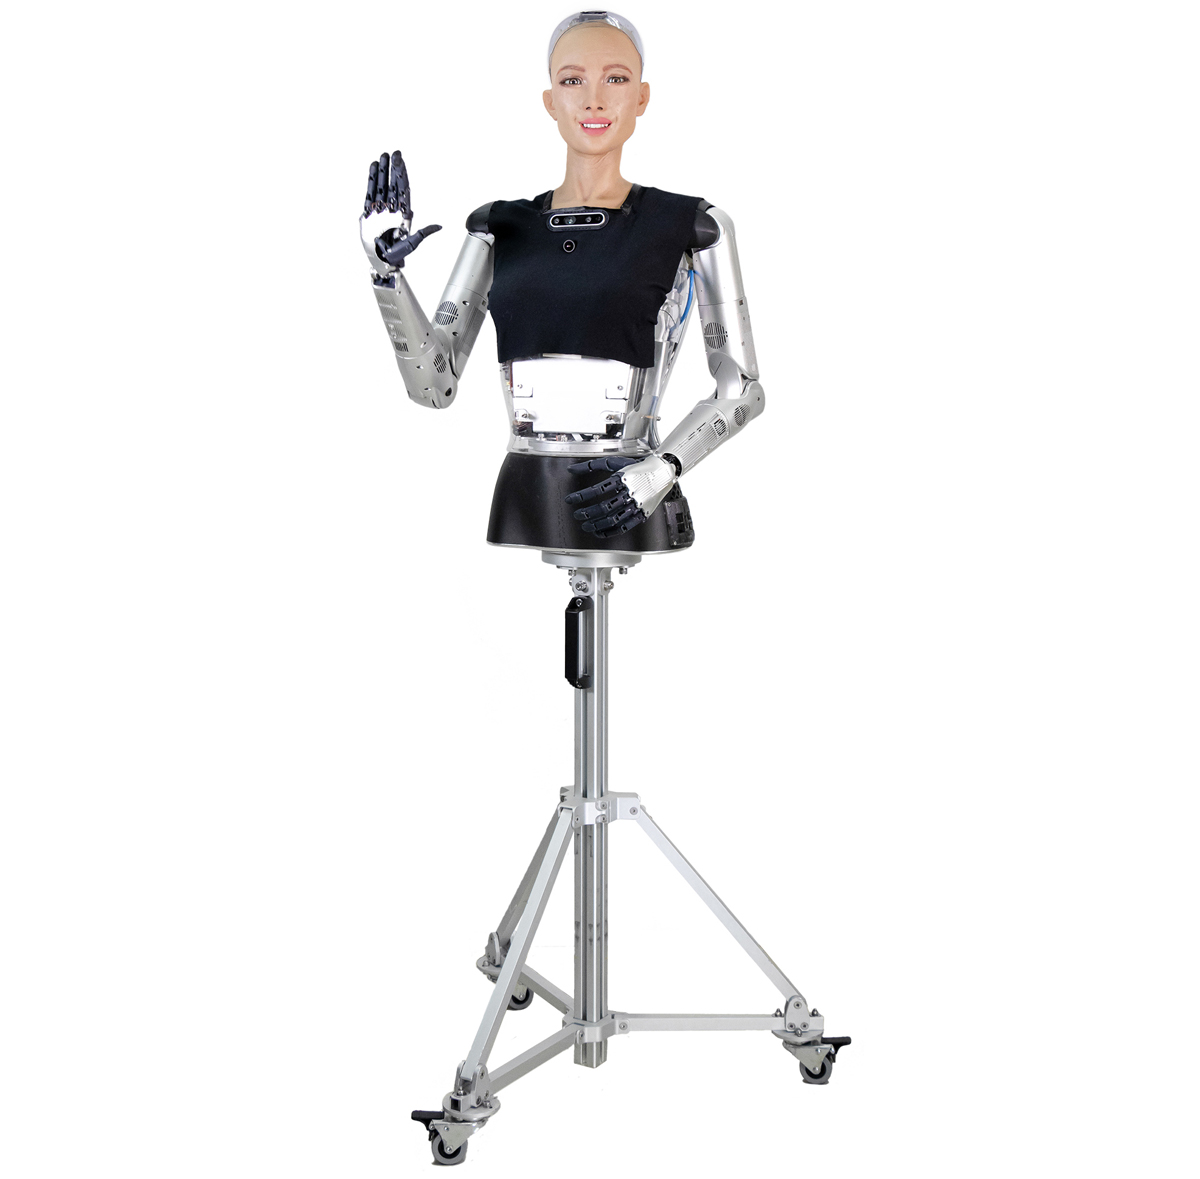 Hanson Robotics Sophia 2020 Humanoid Robot - Click to Enlarge